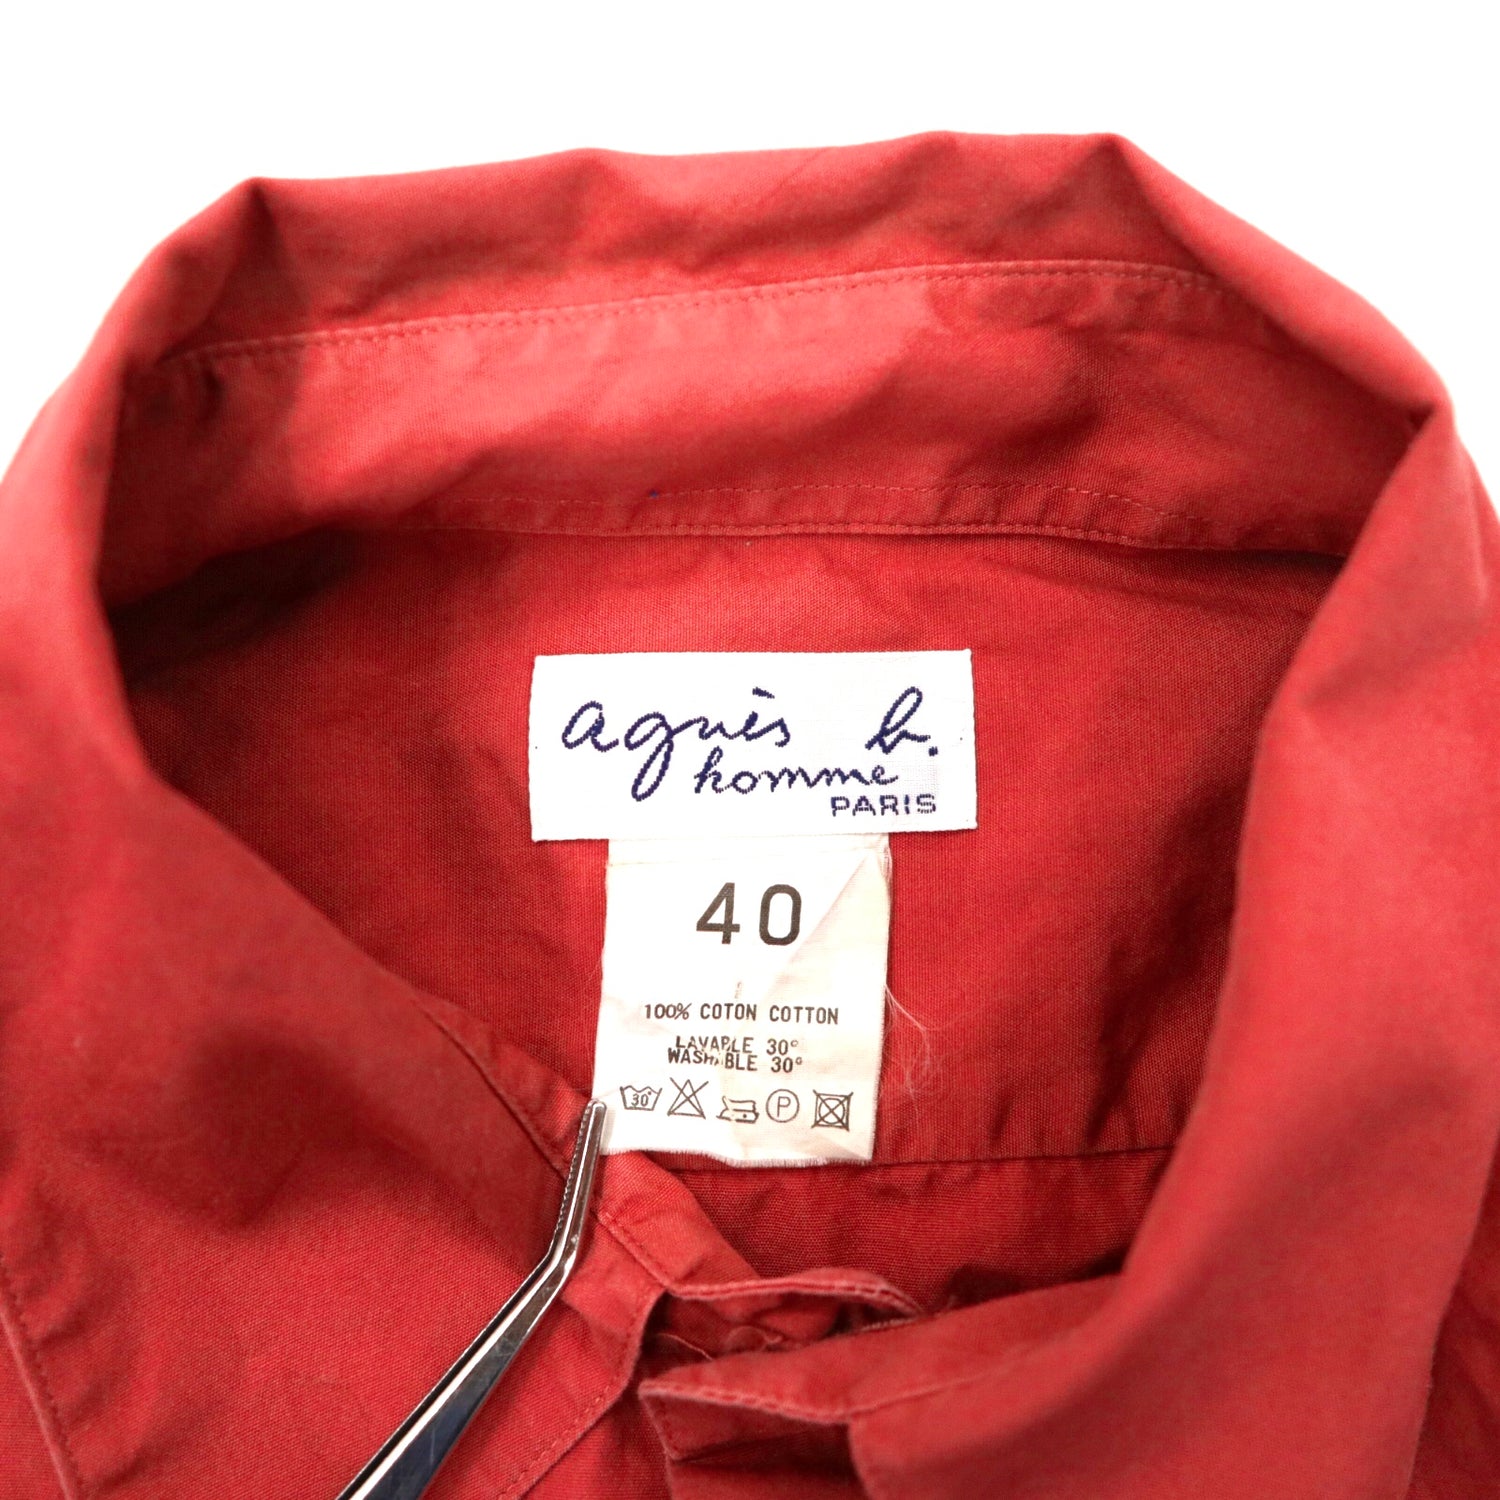 agnes b. homme PARIS ドレスシャツ 40 ピンク コットン 日本製 – 日本